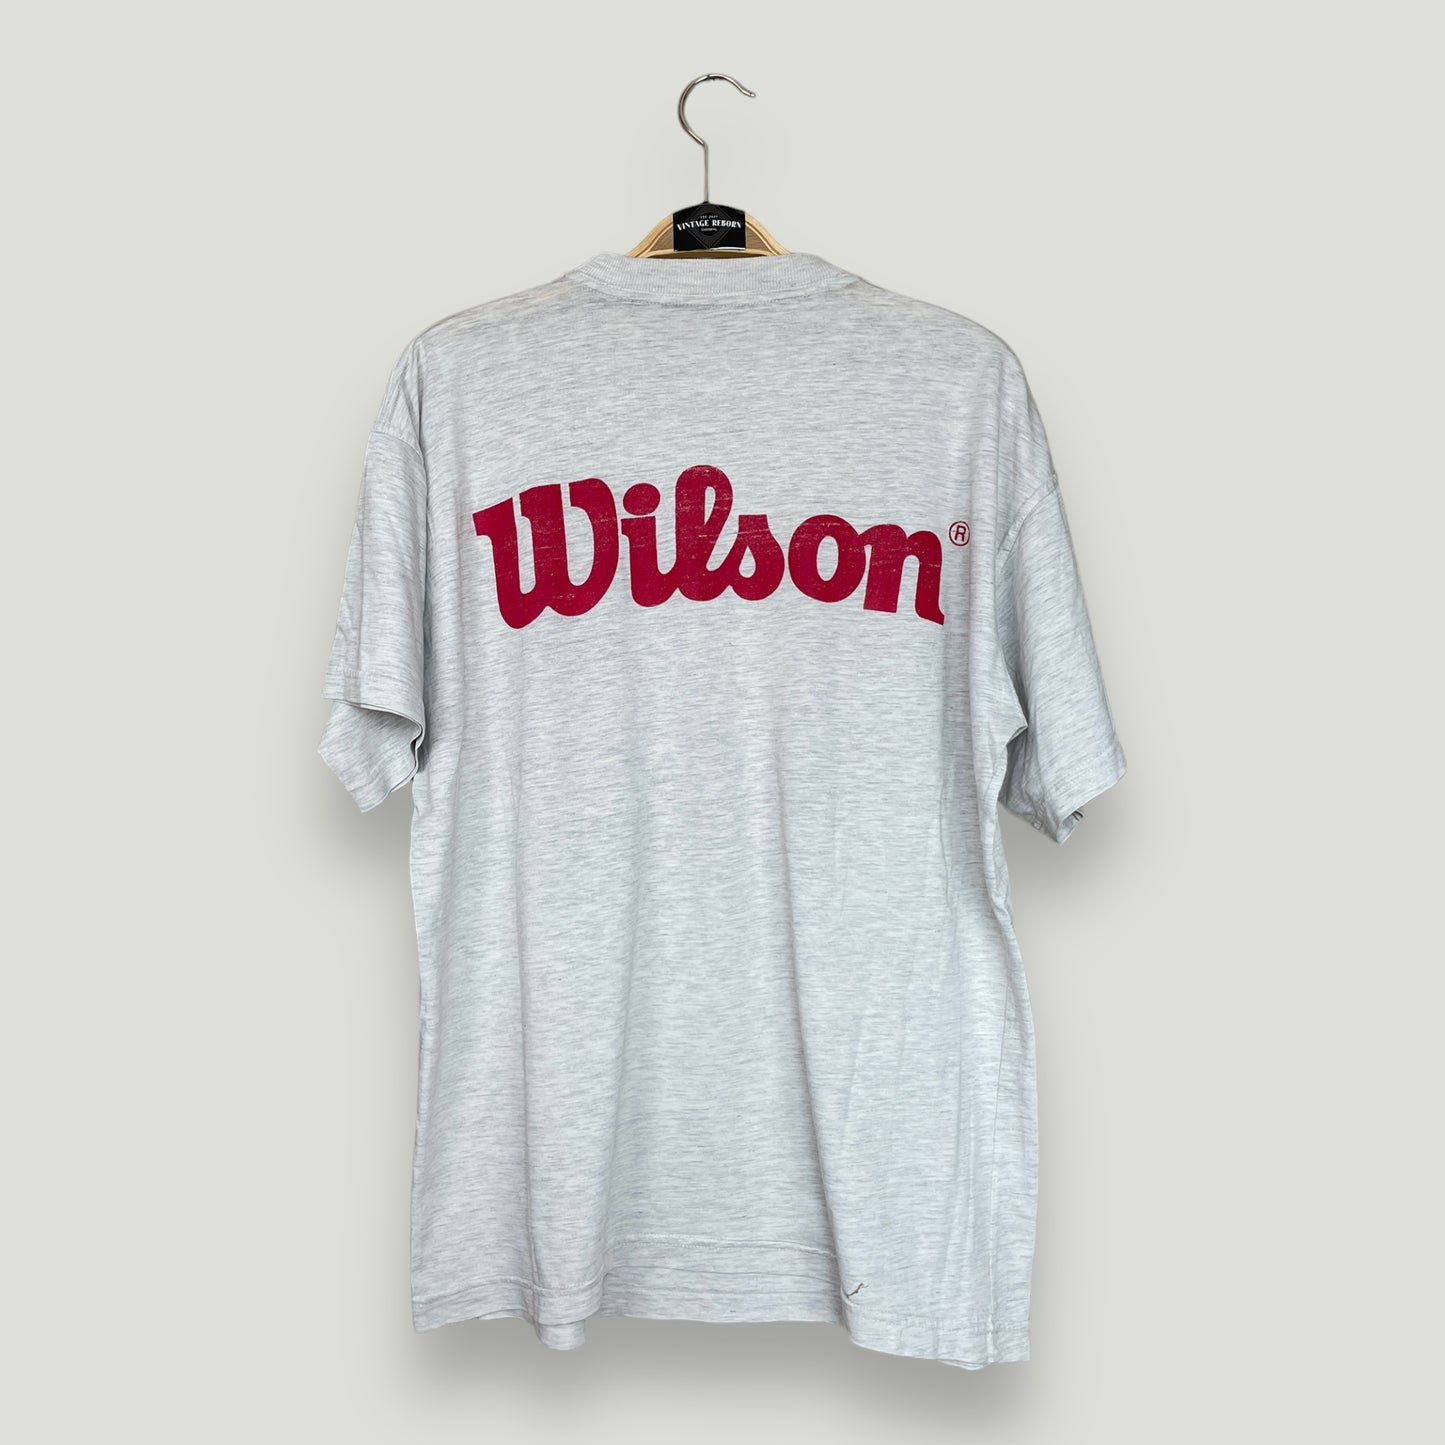 Wilson Vintage Tshirt - Vintage Reborn